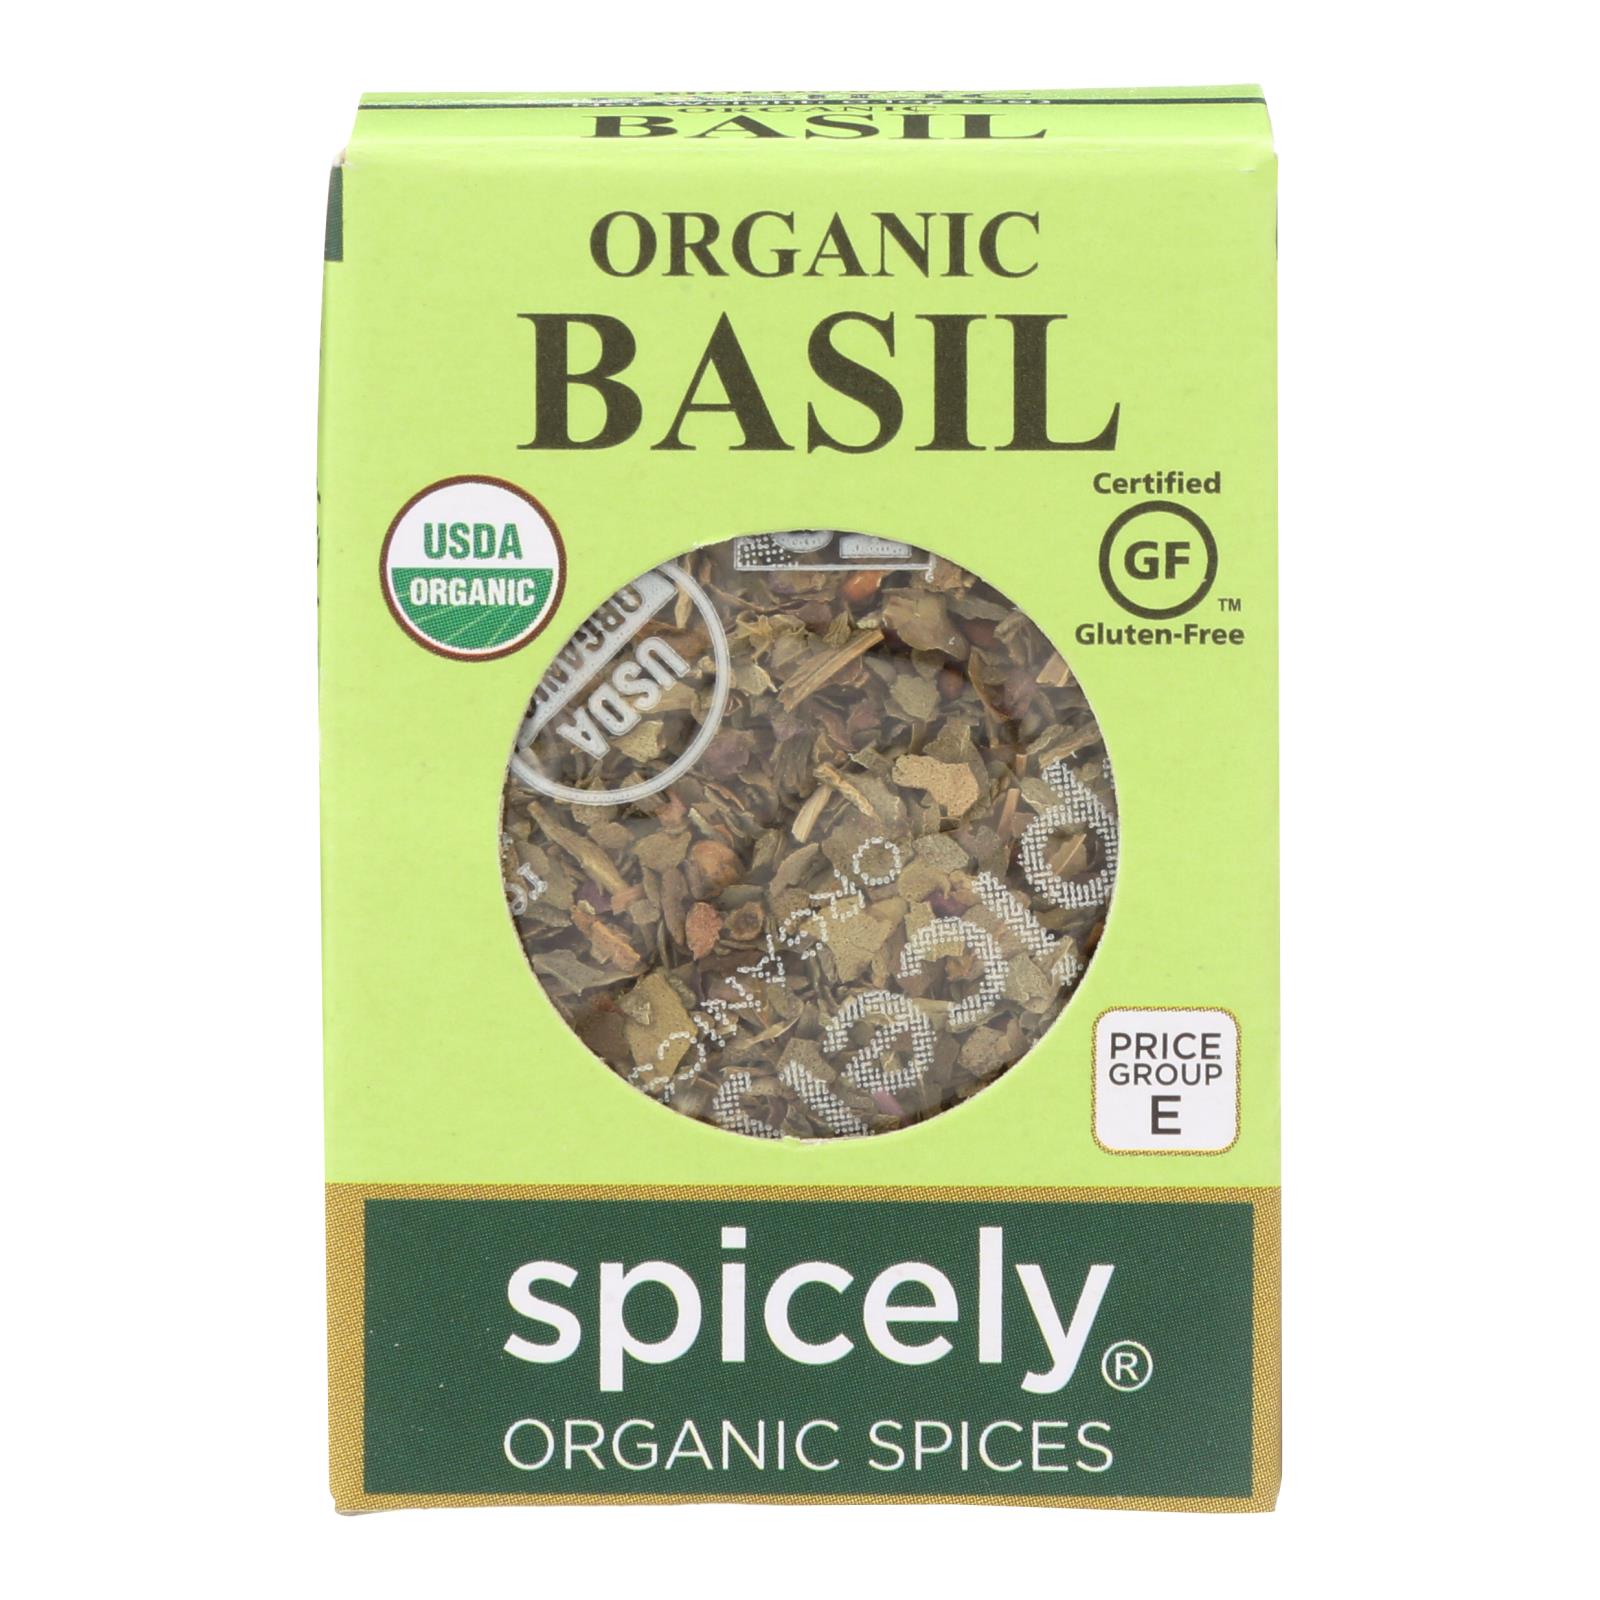 Spicely Organics - Organic Basil - 6개 묶음상품 - 0.1 oz.